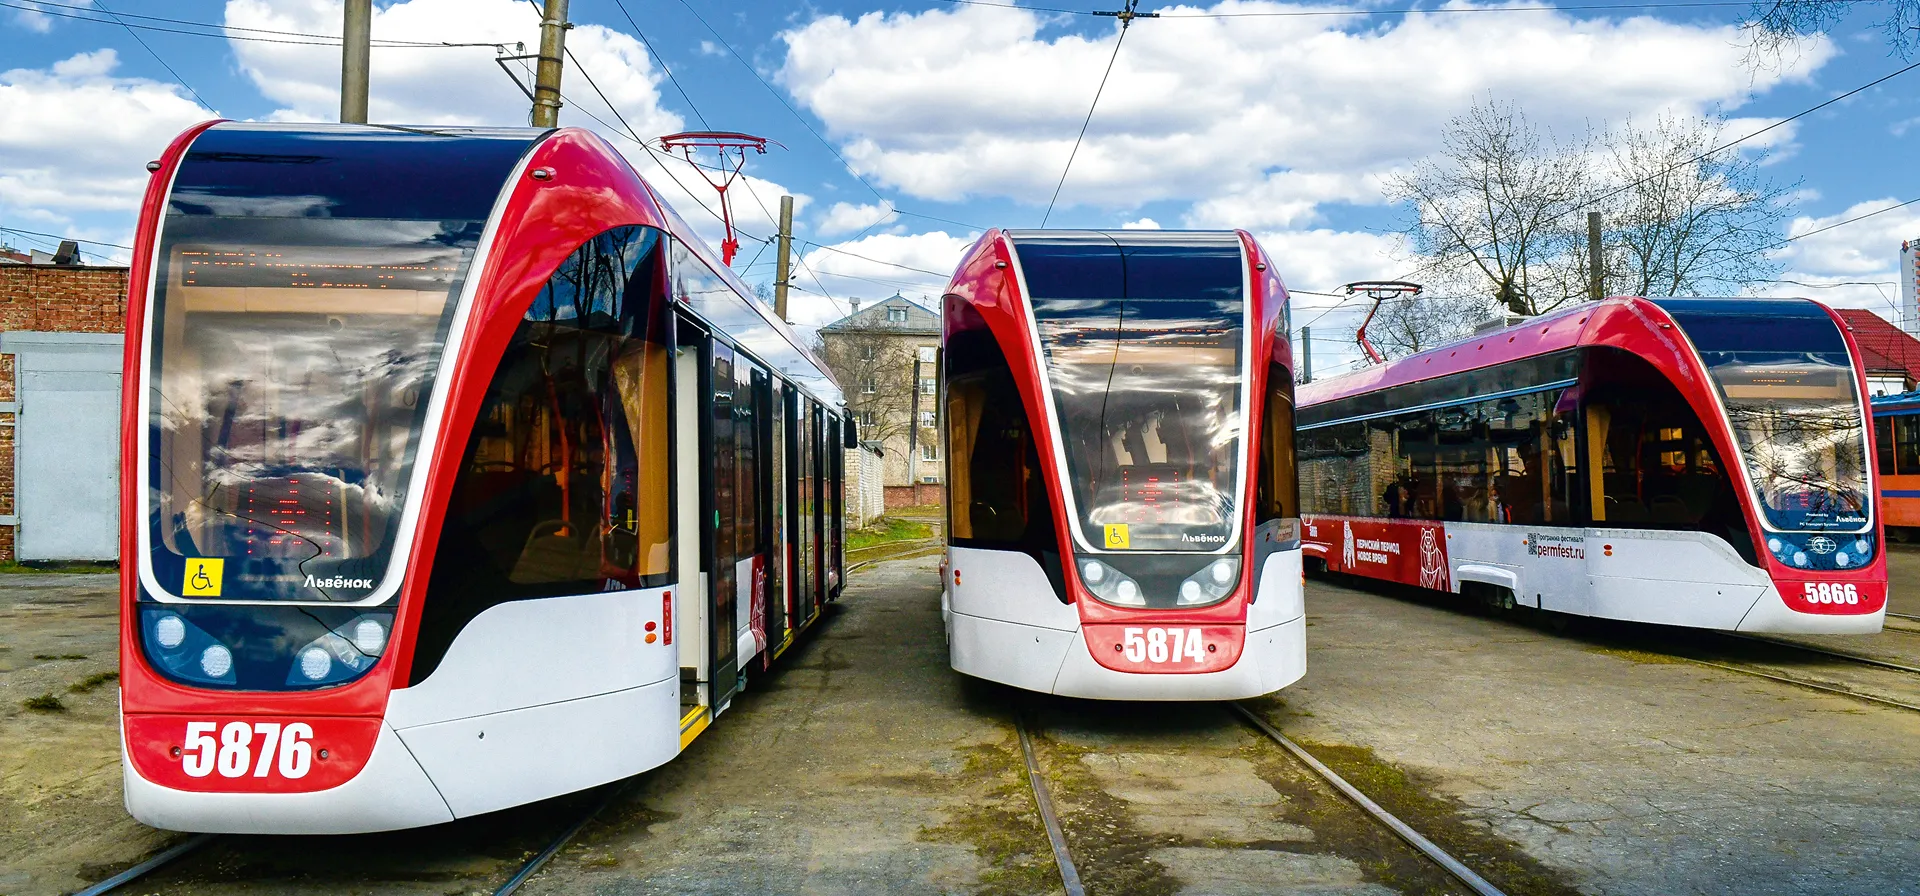 Новые трамваи Перми / Perm's new trams